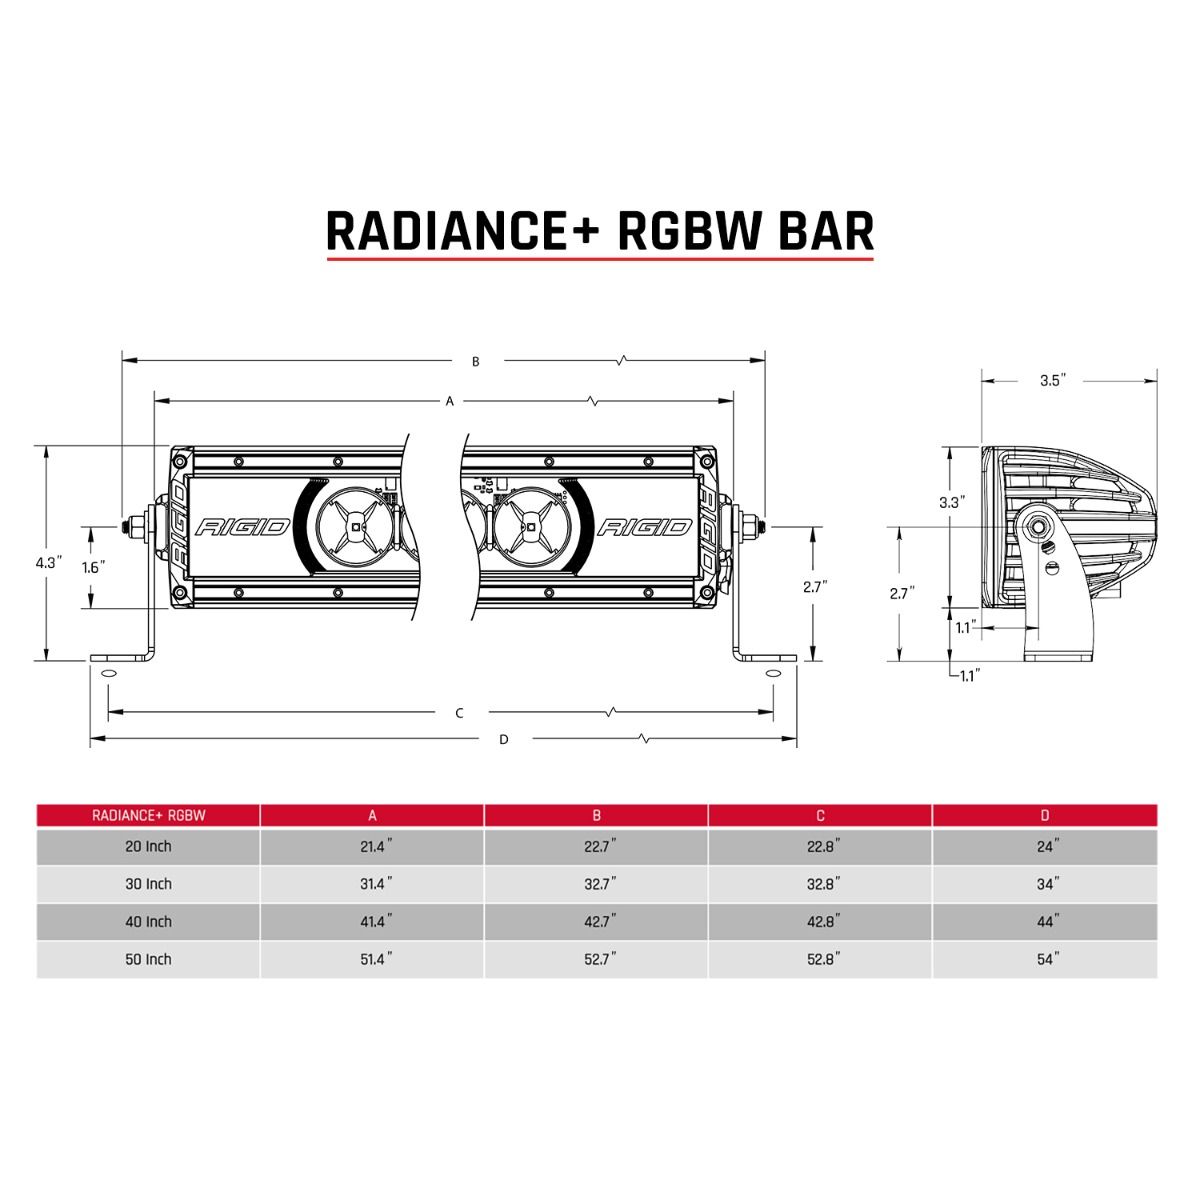 Rigid Radiance 50" RGBW Light Bar